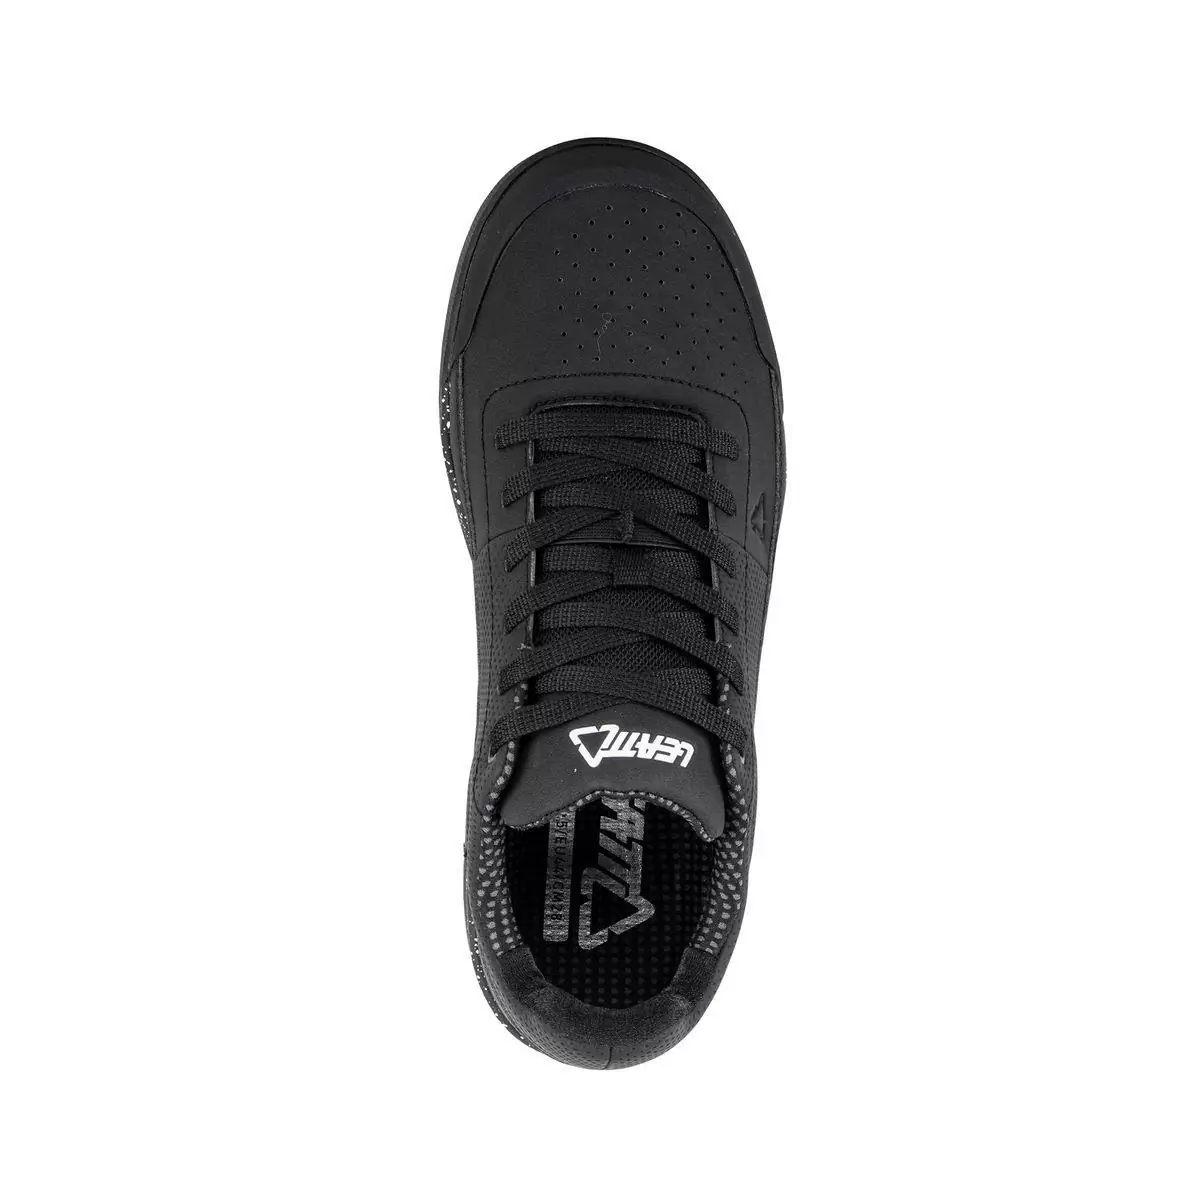 Mtb Shoes 2.0 Flat Black Size 38.5 #2